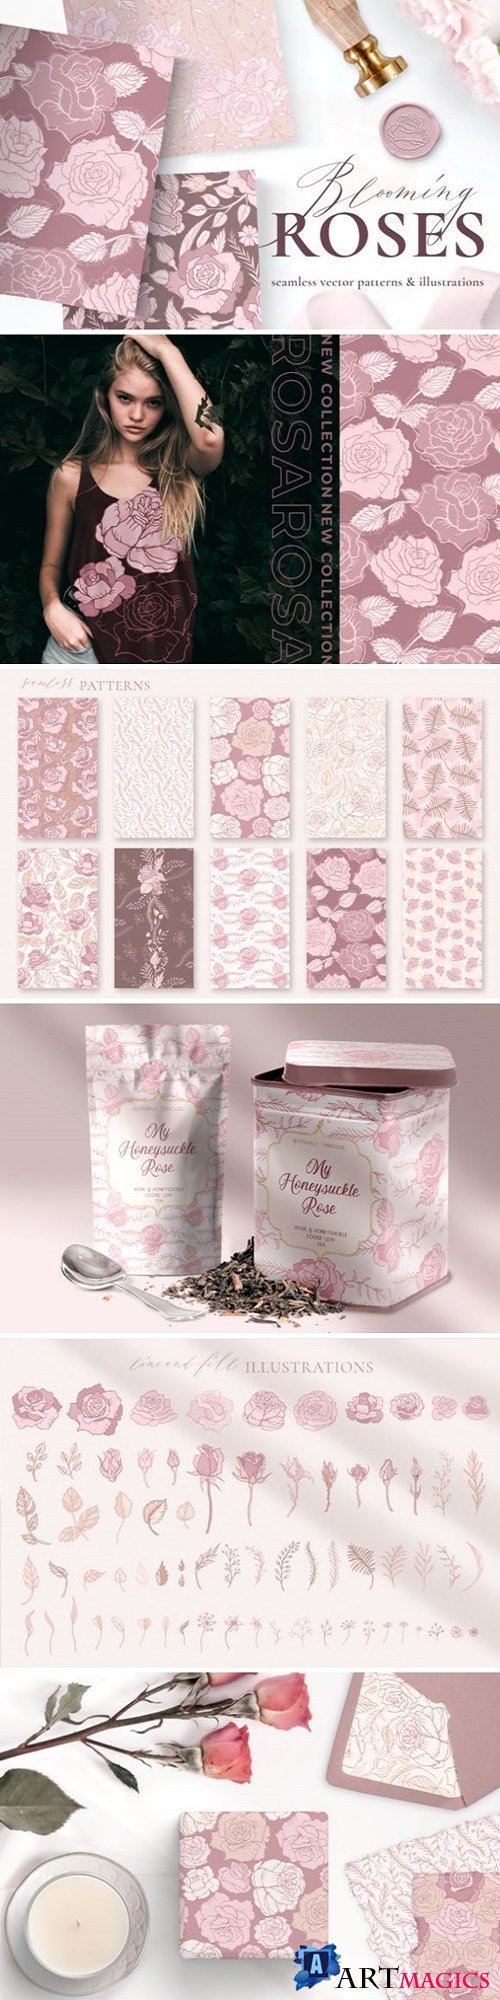 Rose Flower Patterns & Illustrations - 4586765